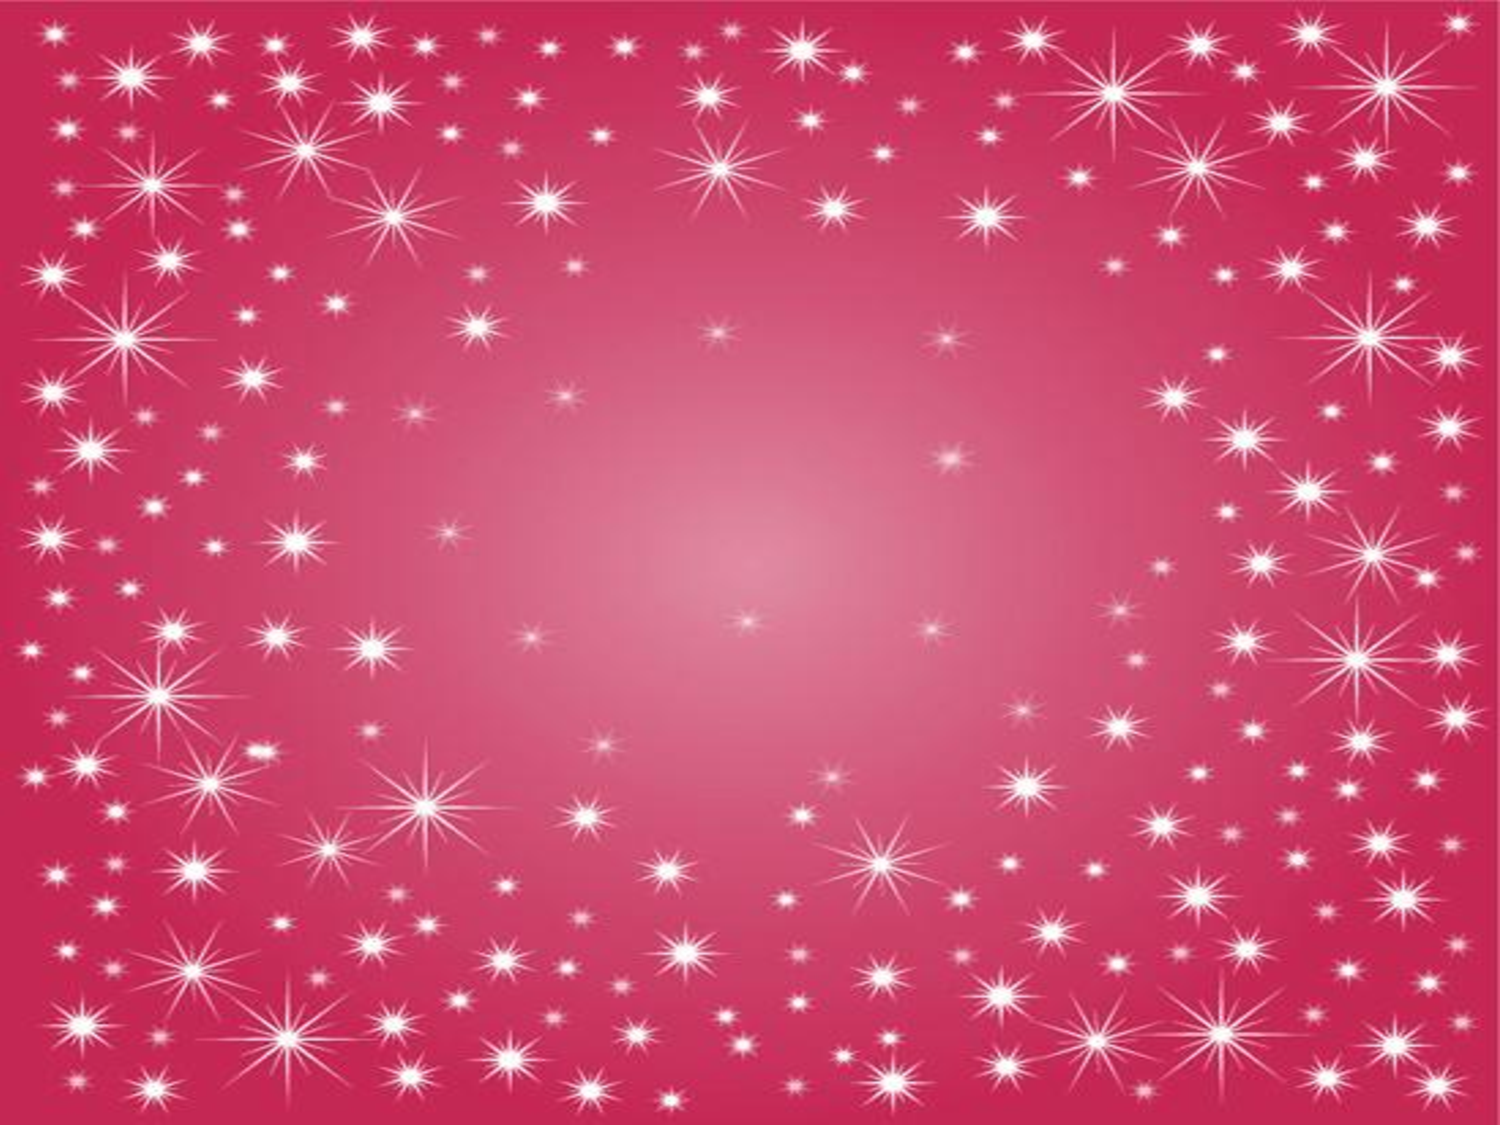 Pink Background Image